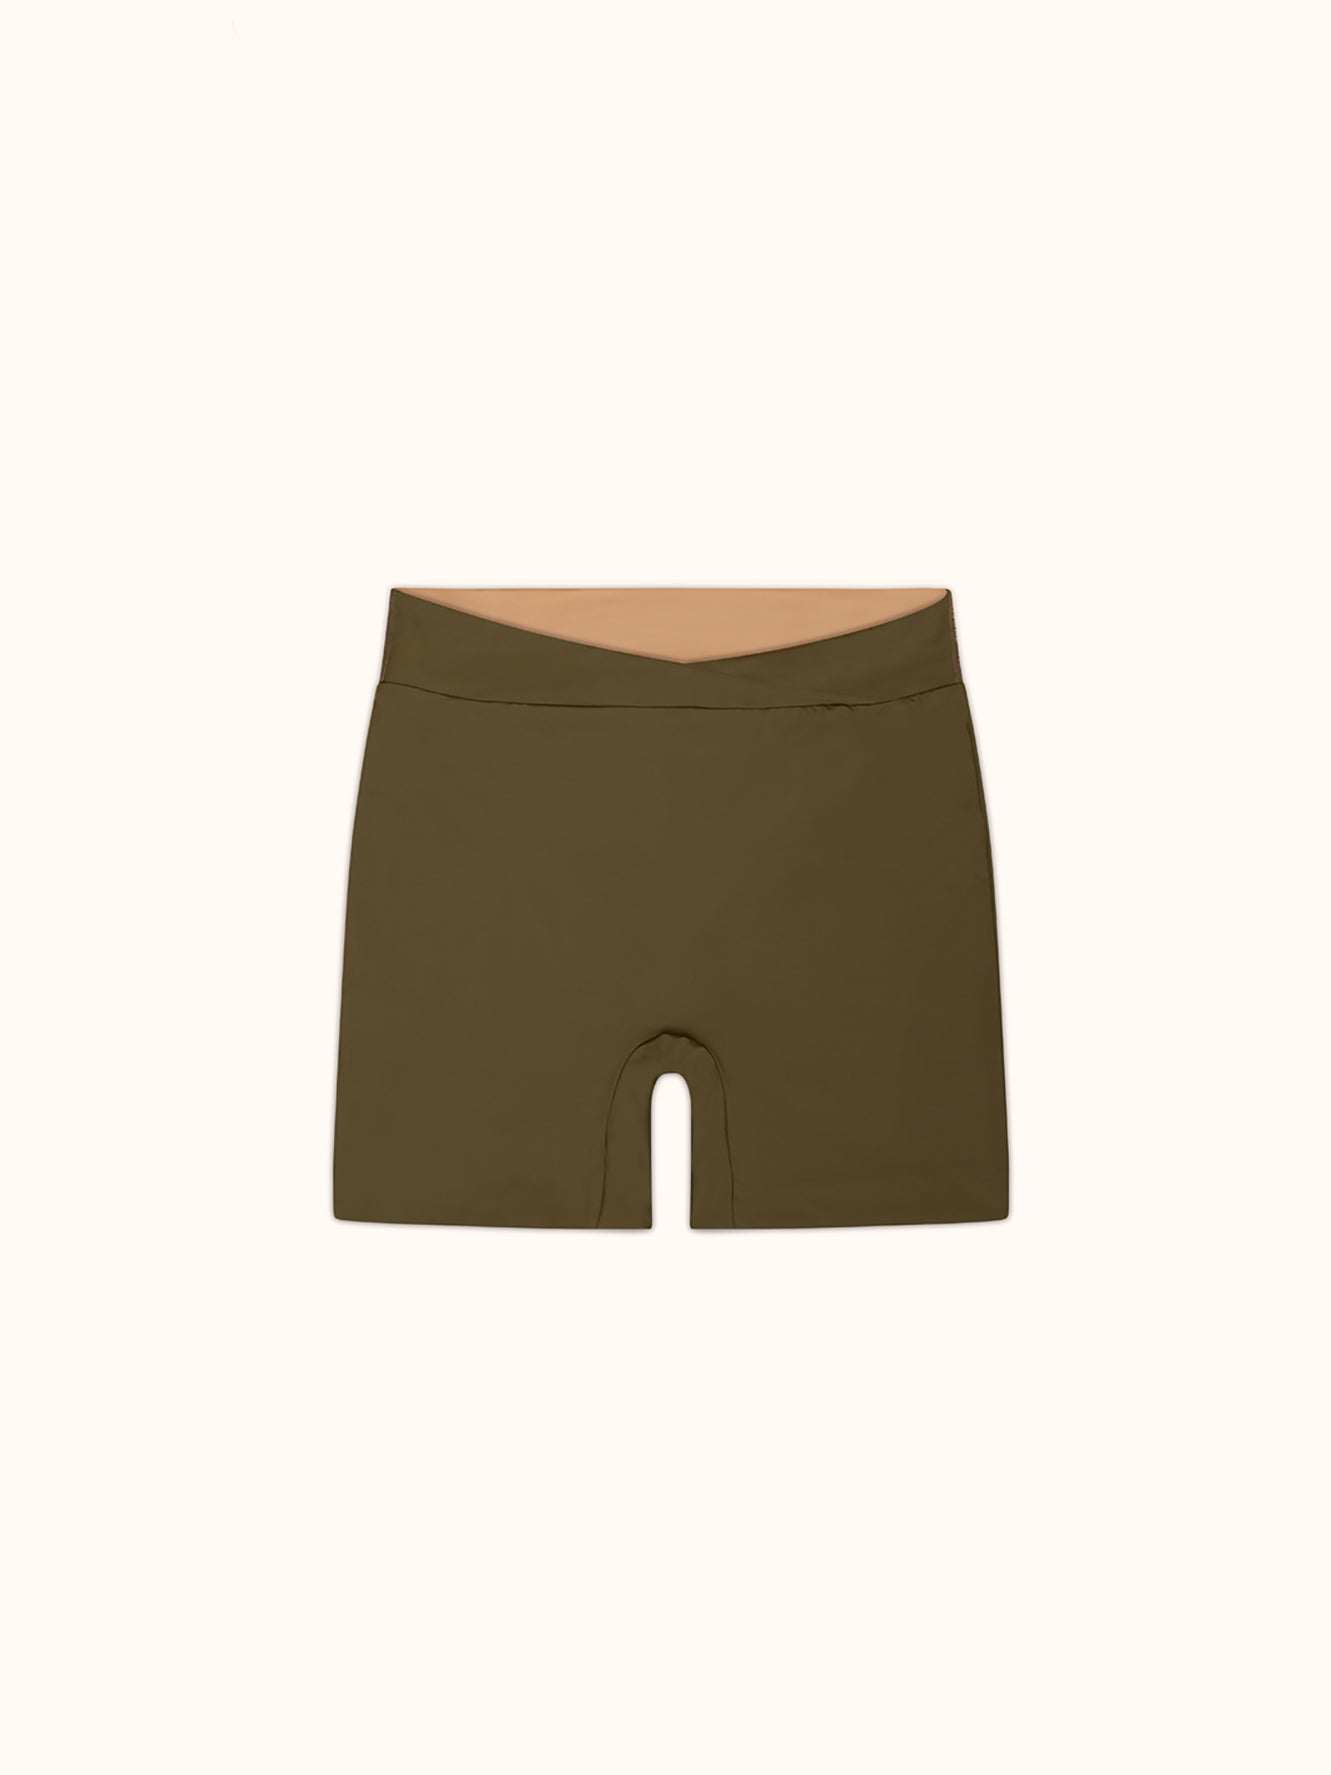 Activewear Shorts Set Khaki/Nude